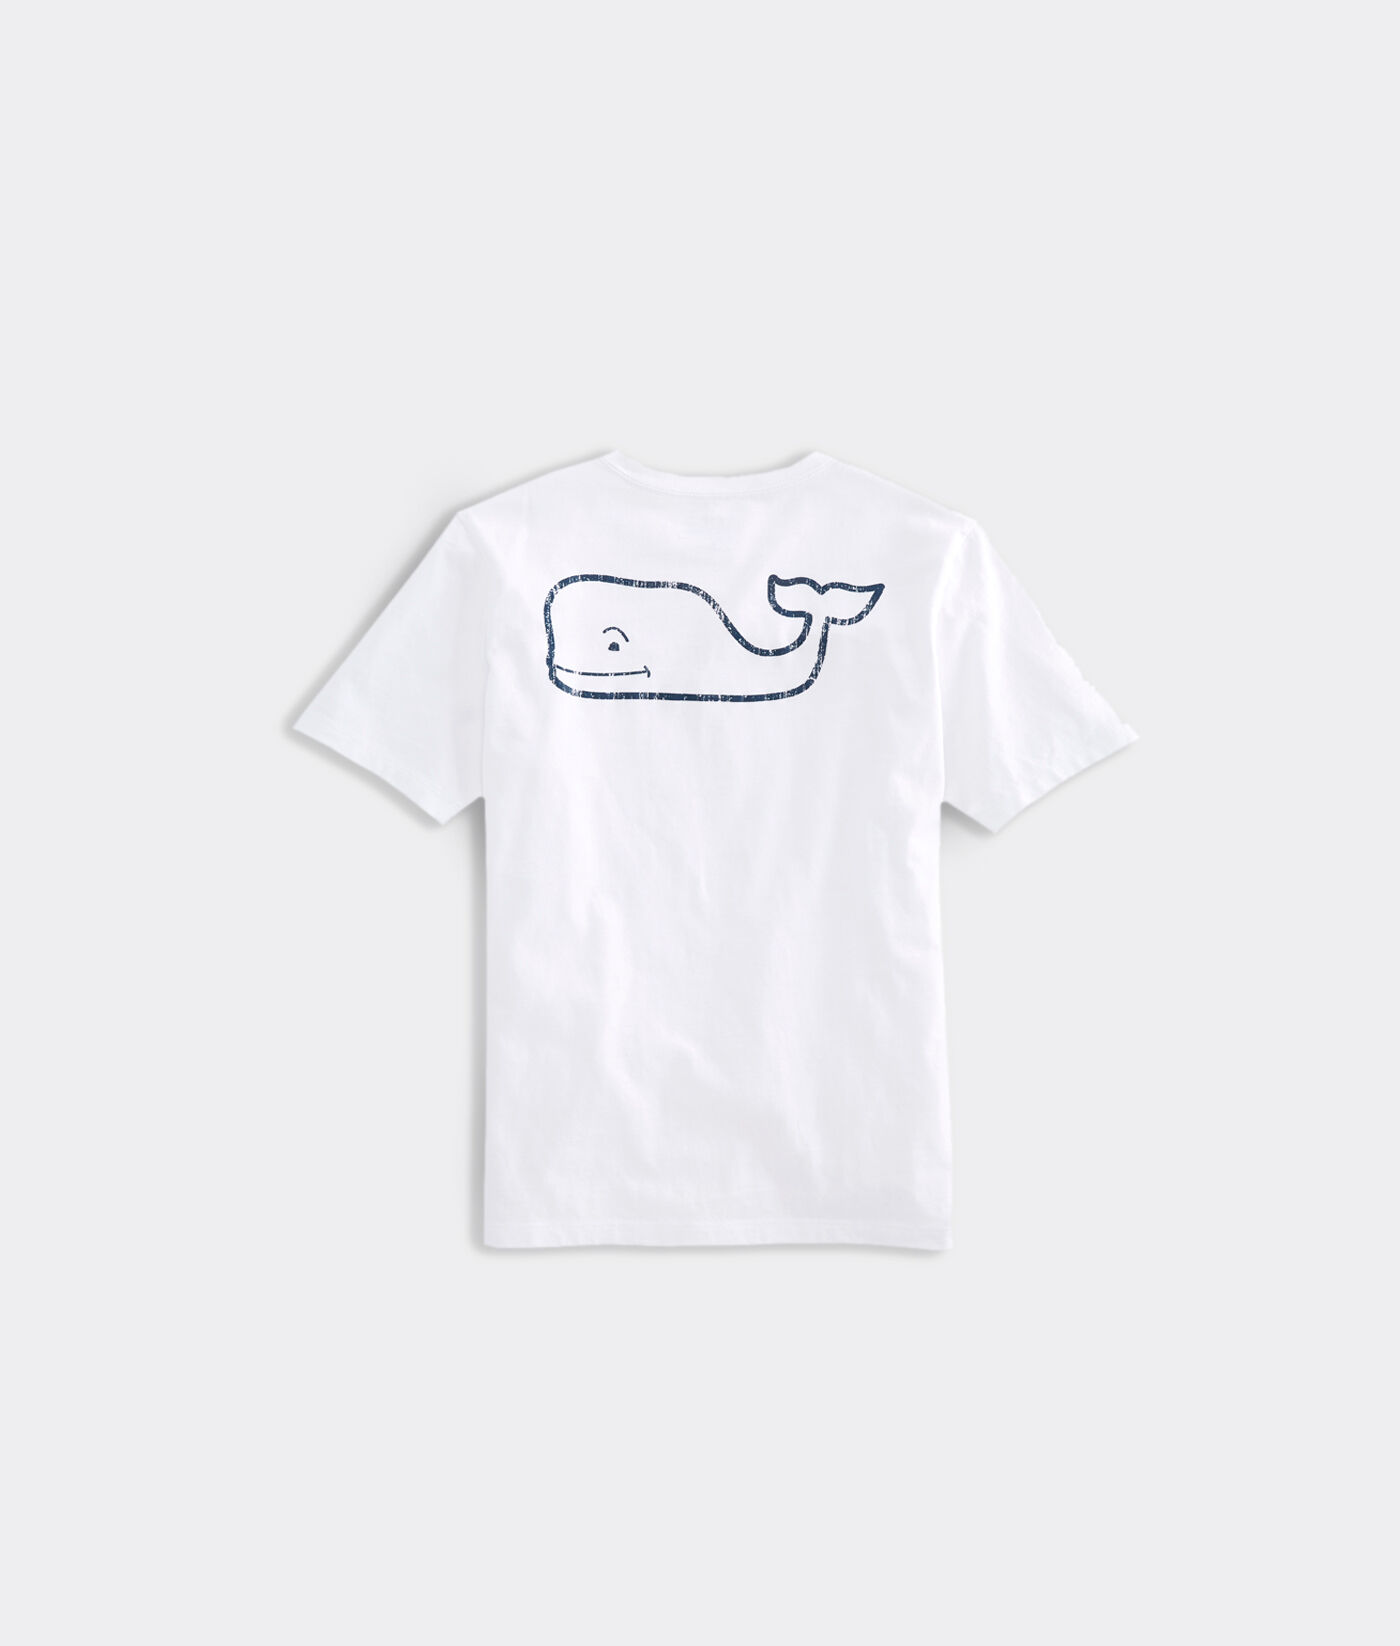 Vineyard Vines Girls S/S America Whale White Cap Graphic Pocket T-Shirt 